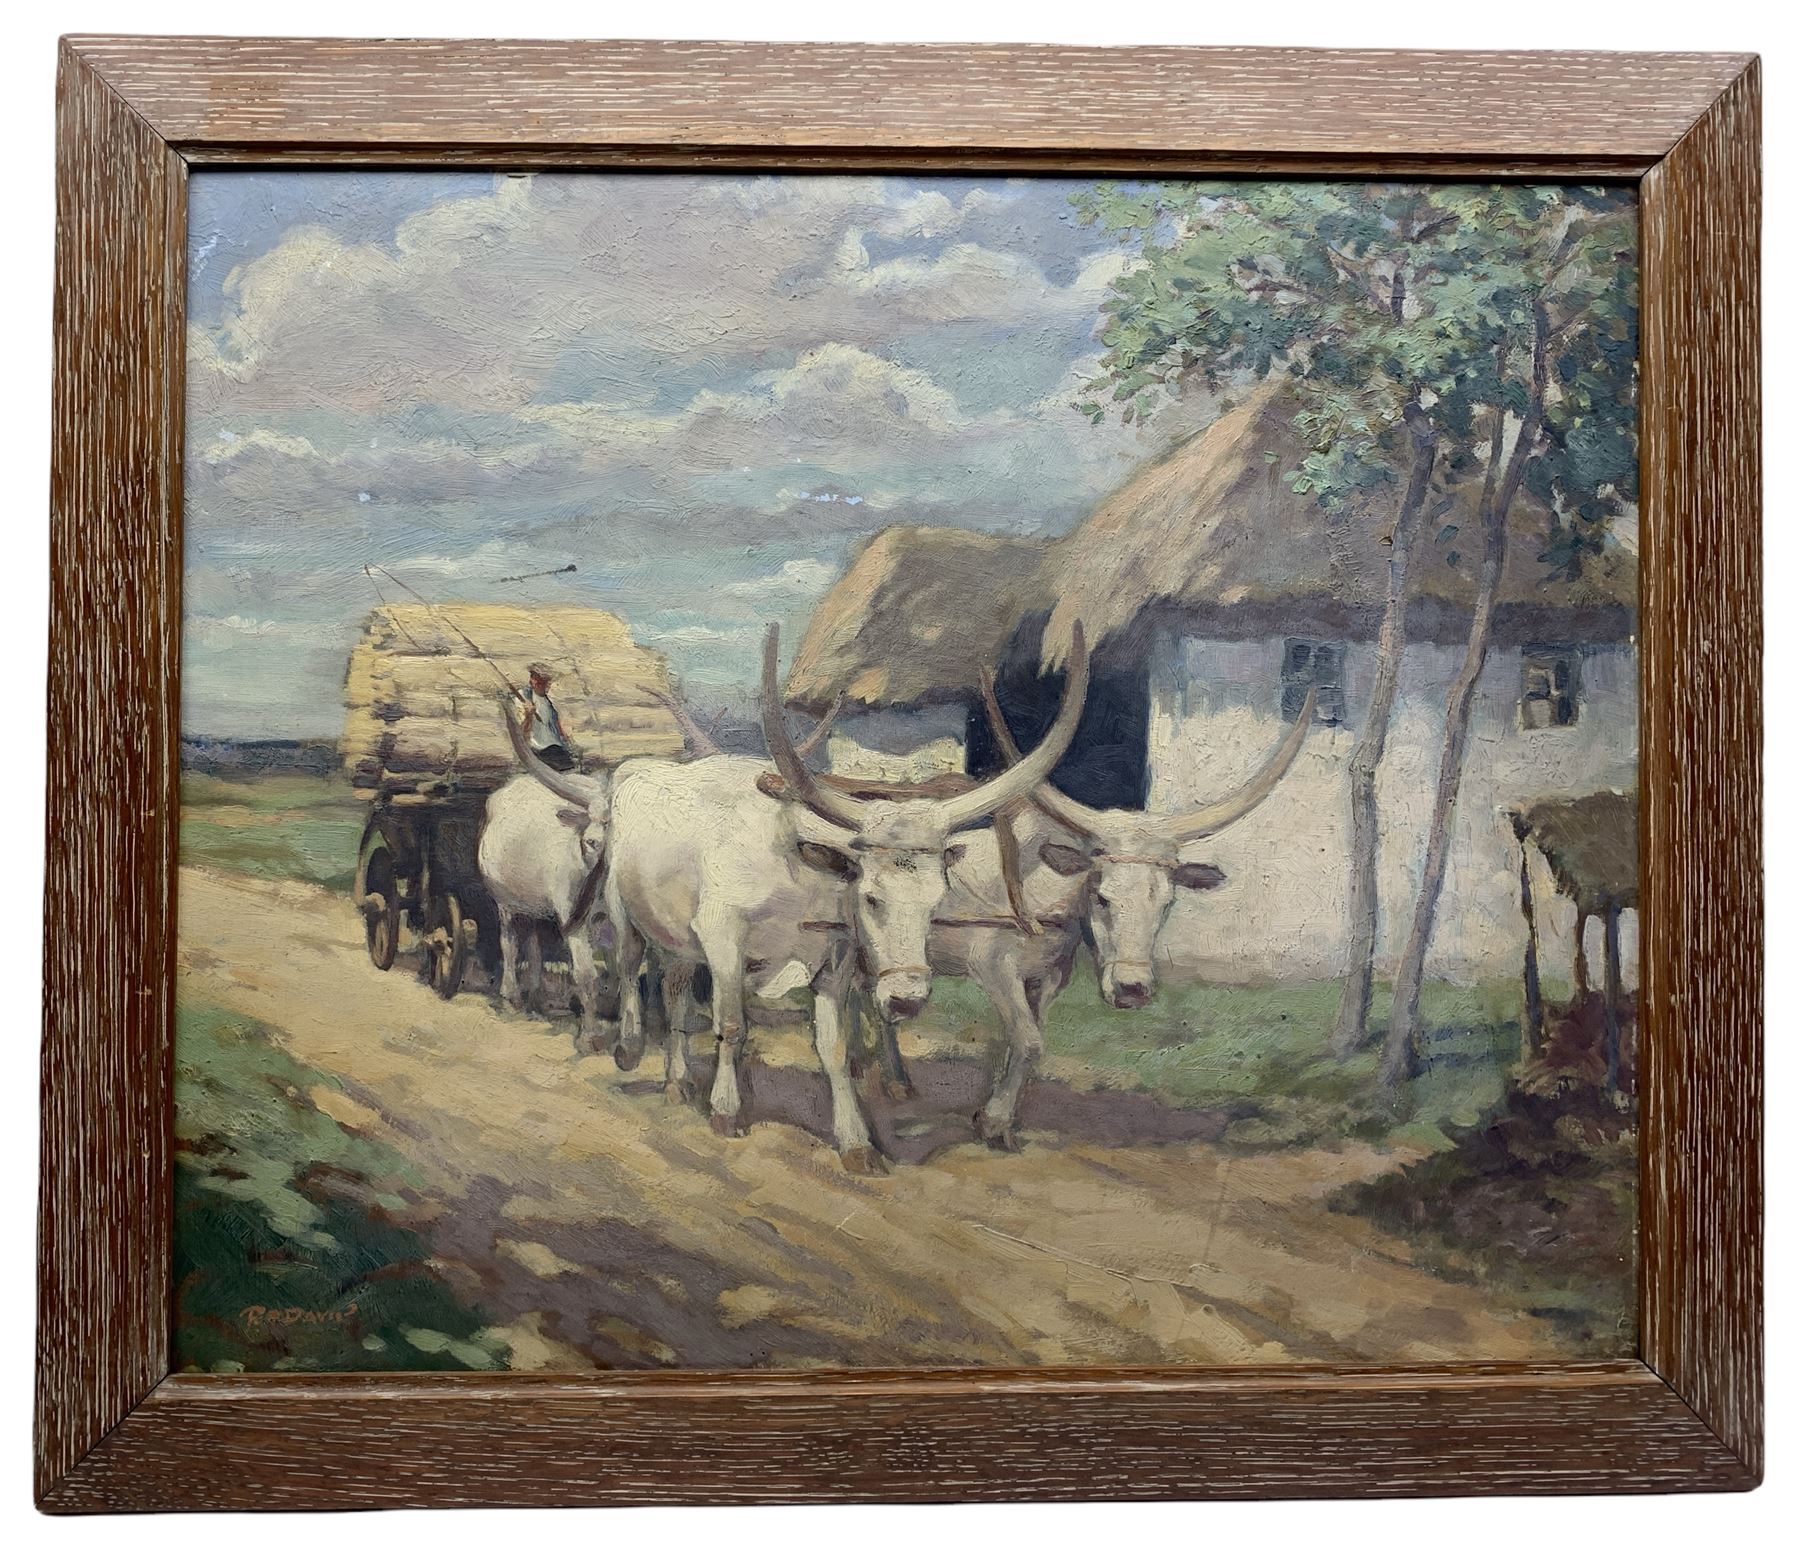 R B David (British early 20th century): Ox Cart and Rice Farmer - Image 2 of 2